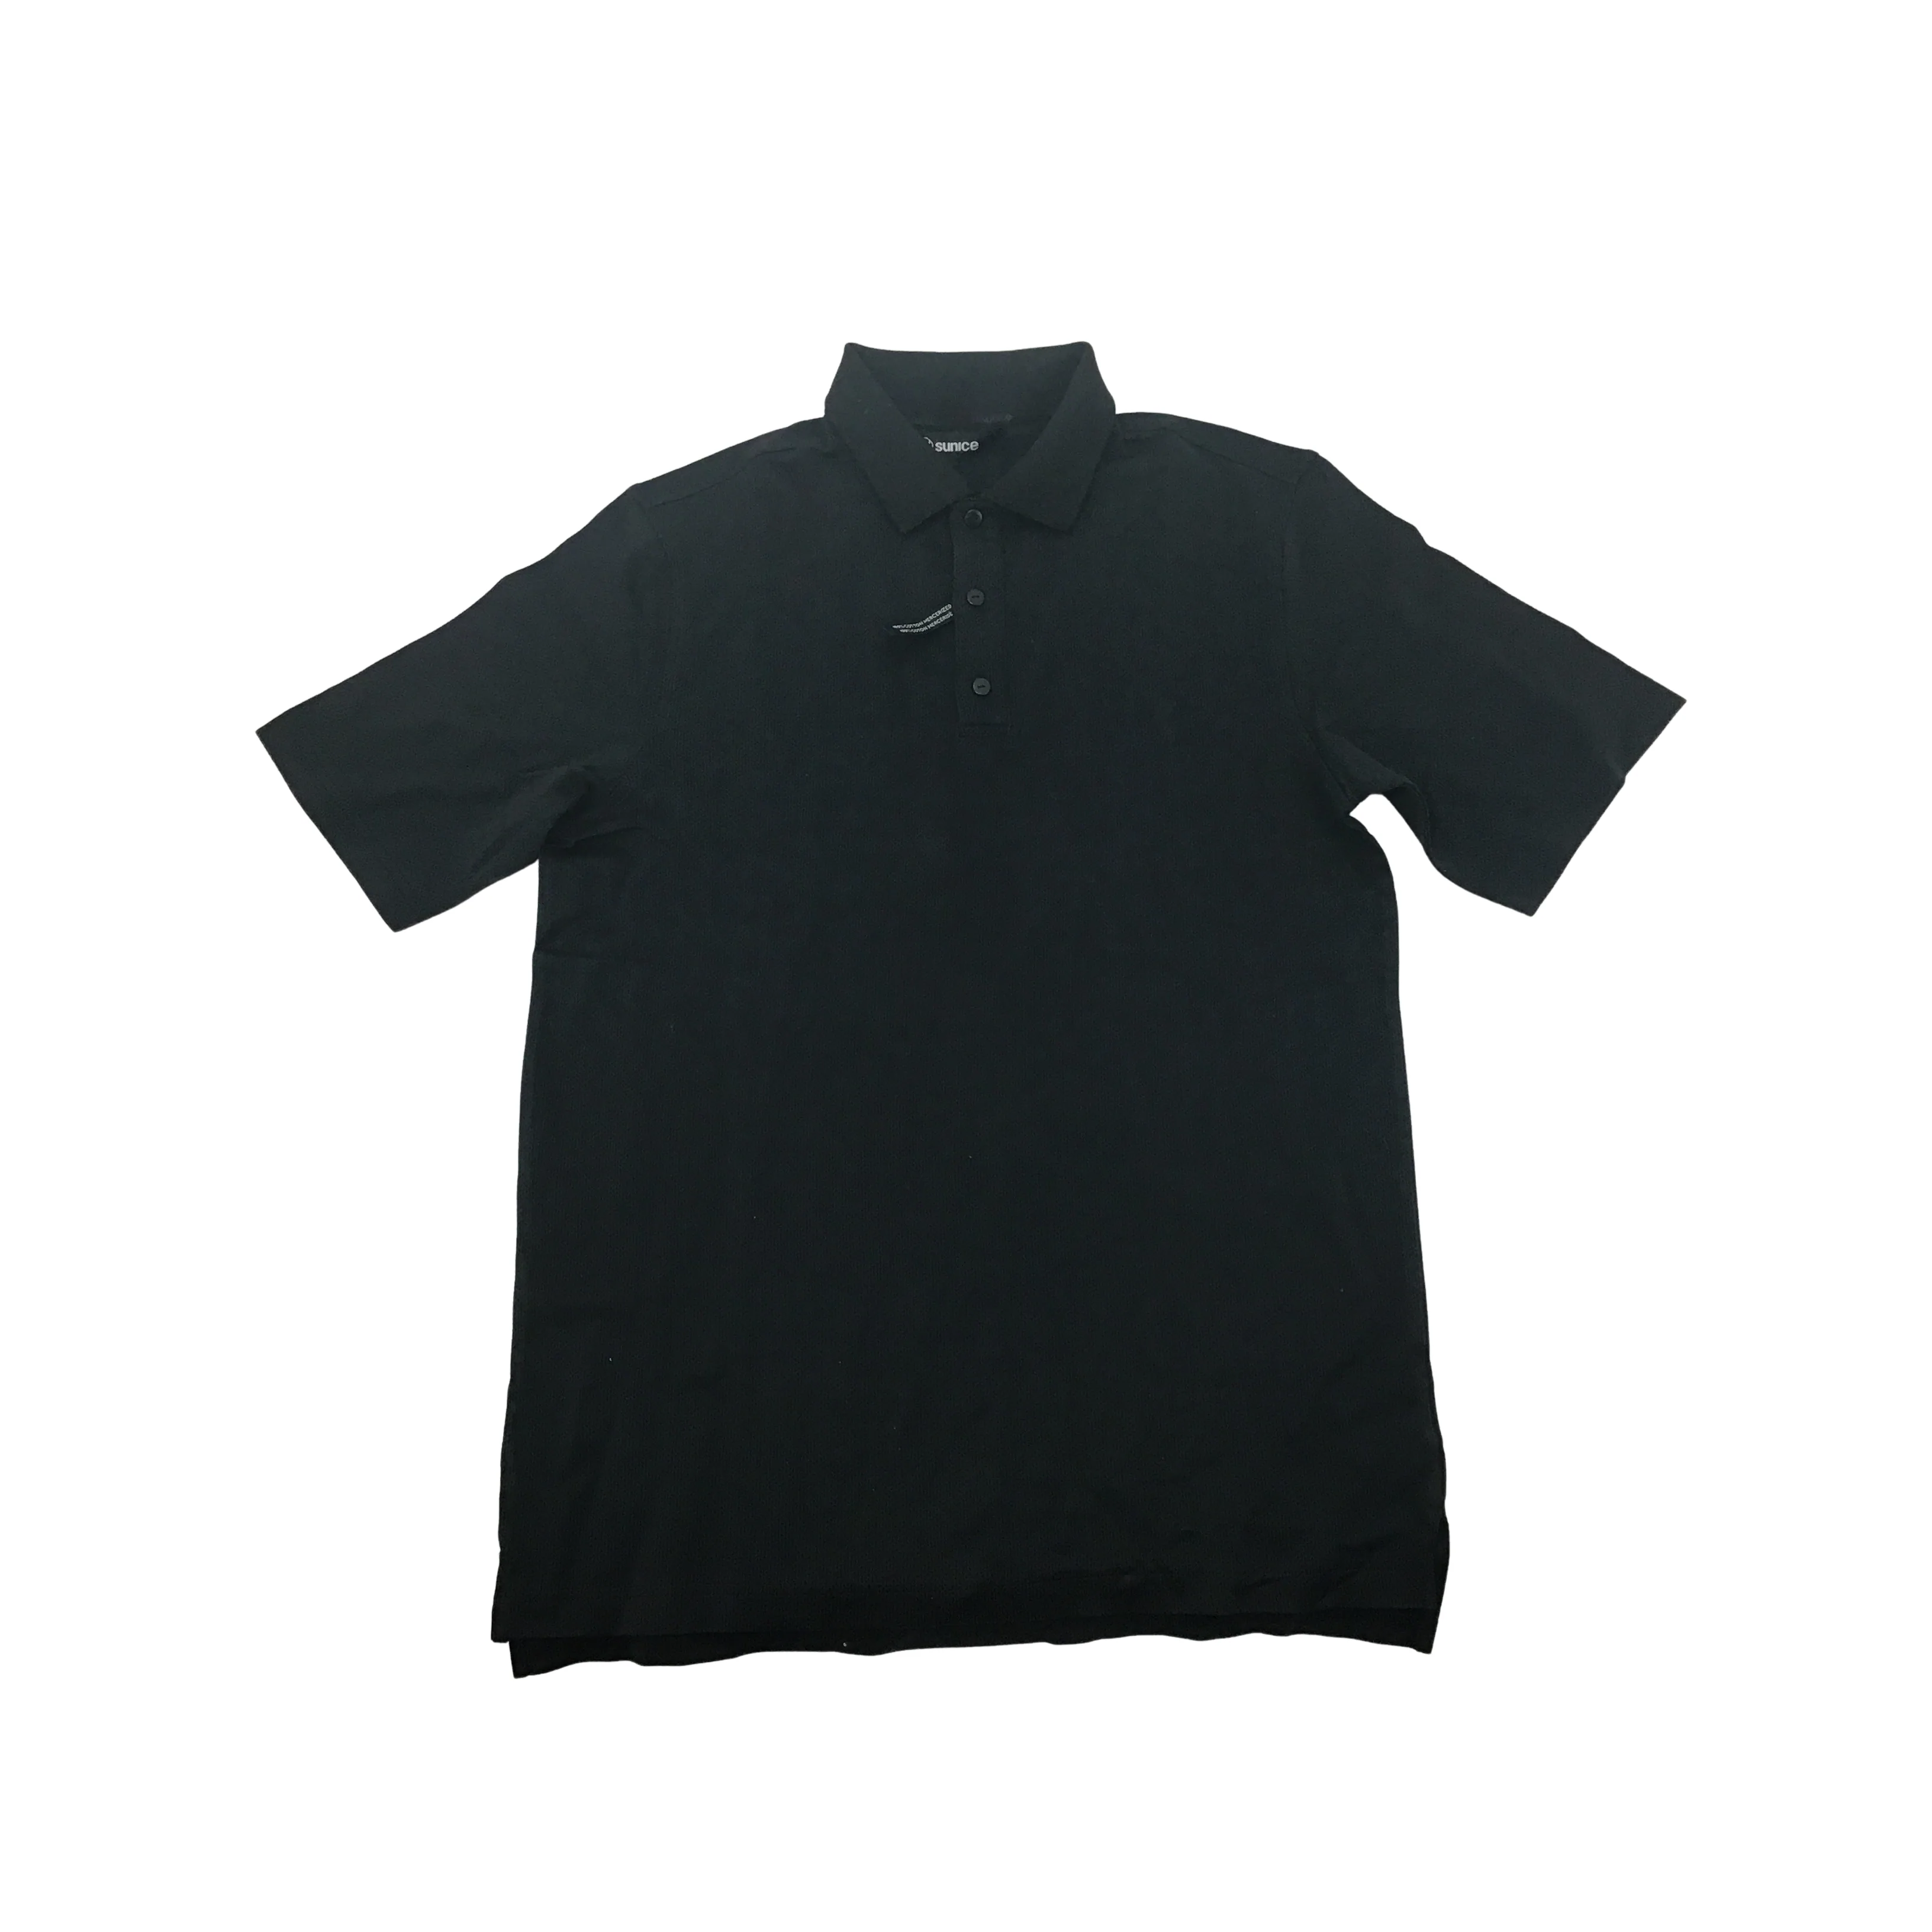 Sunice Men's Polo Shirt : Black / Size Small